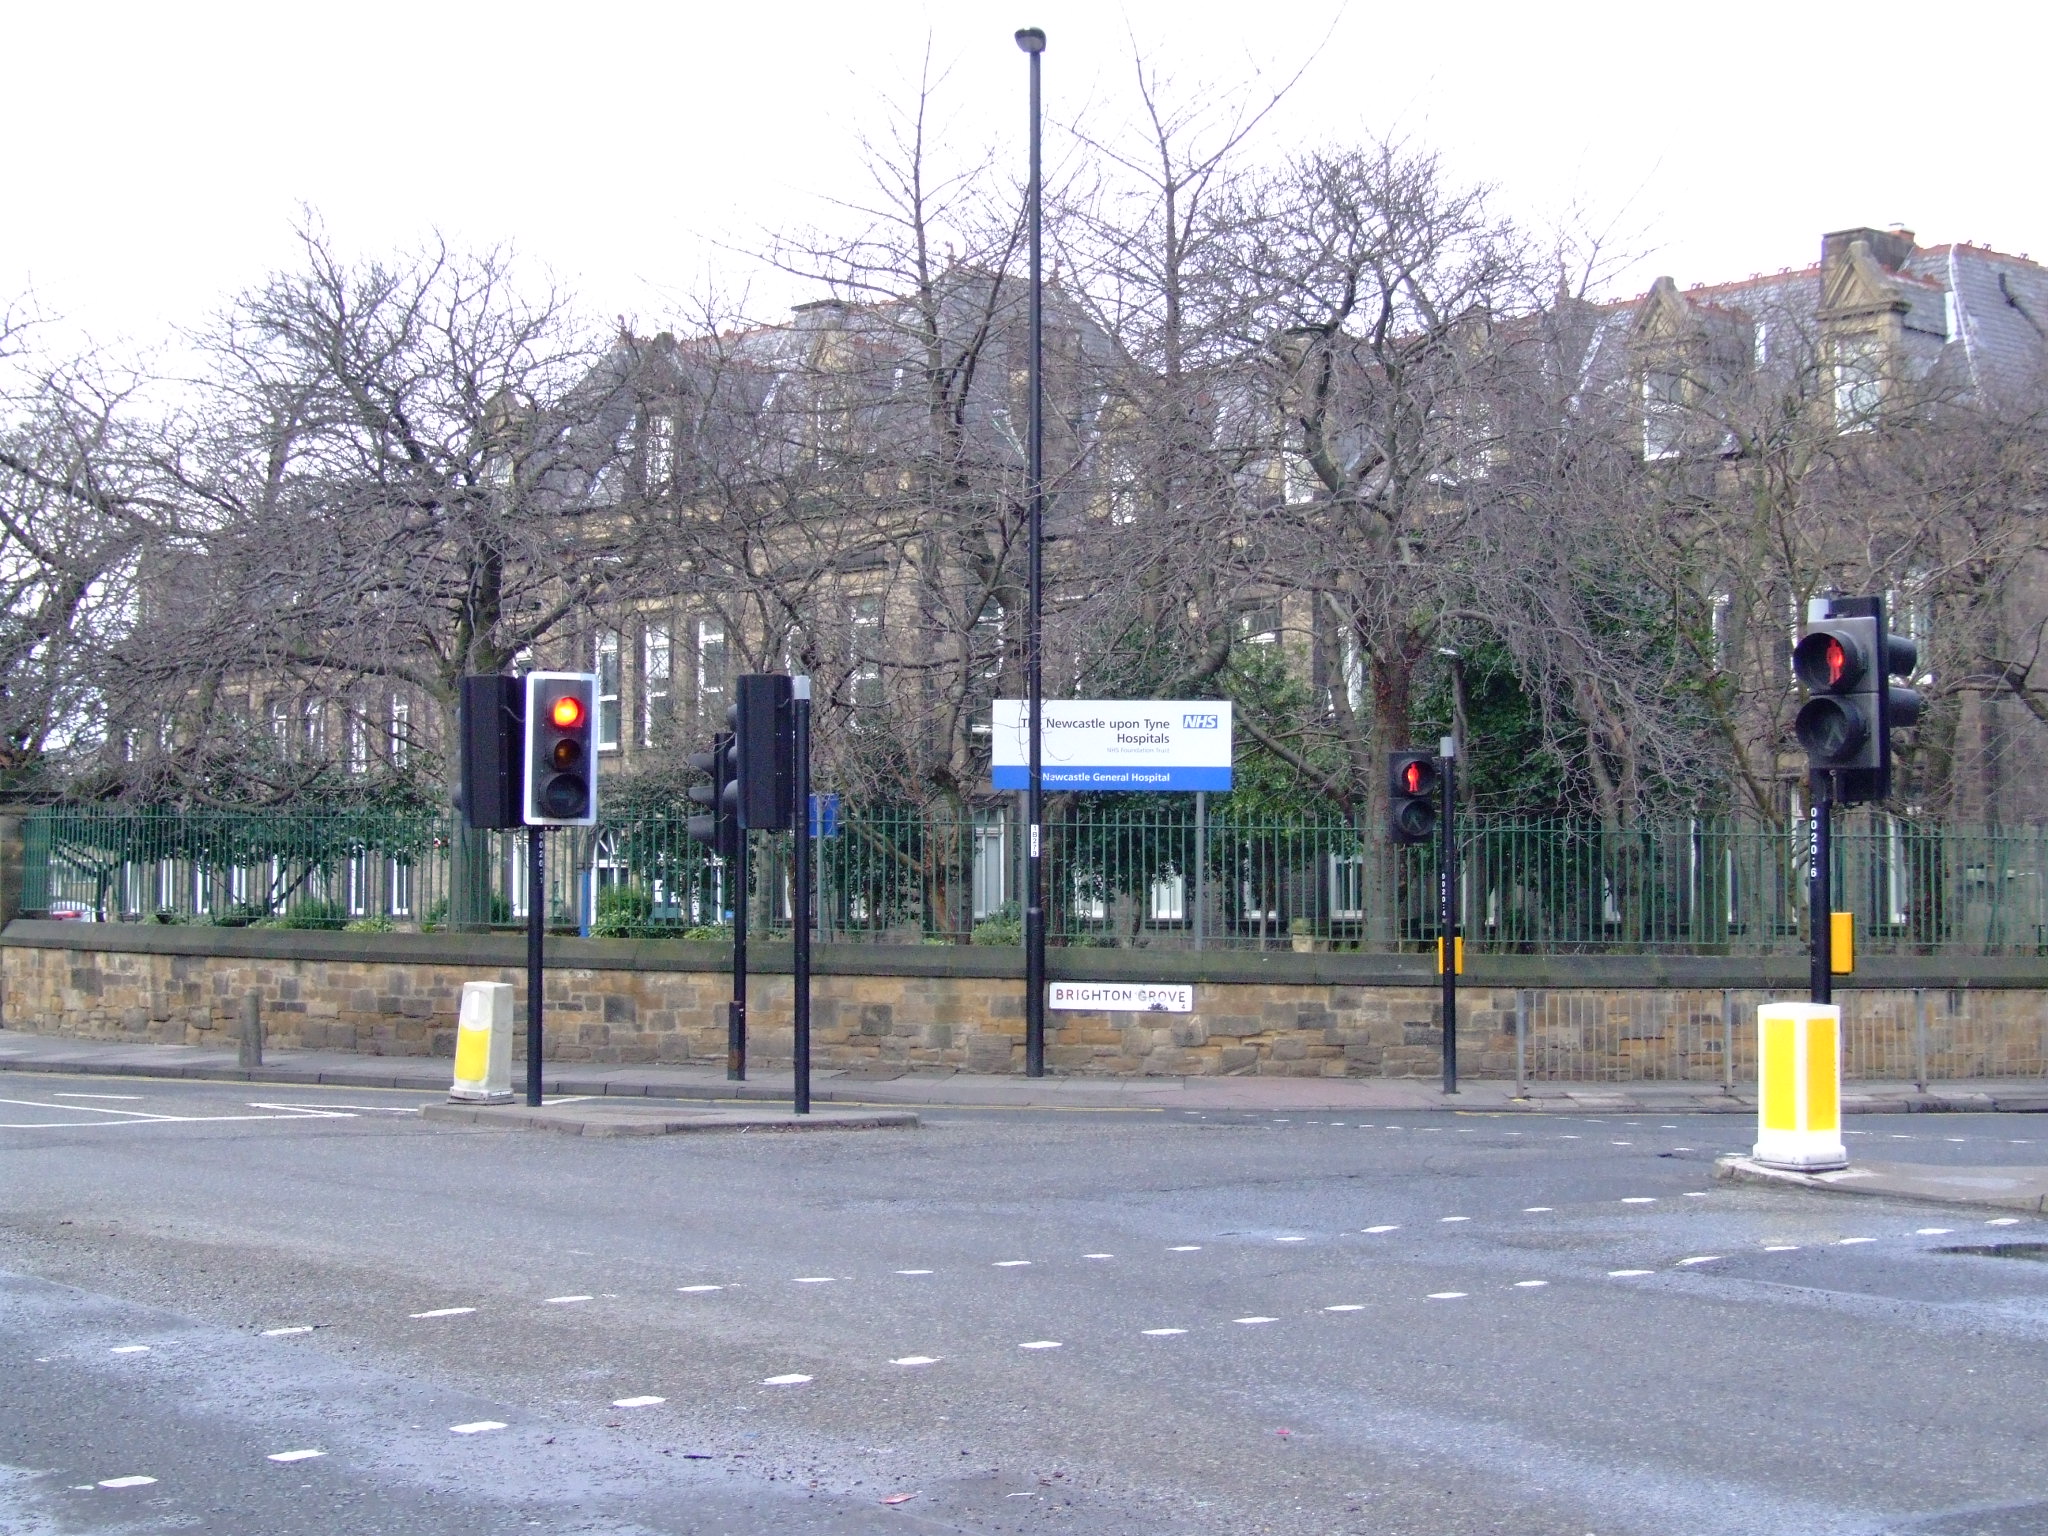 Newcastle General Hospital